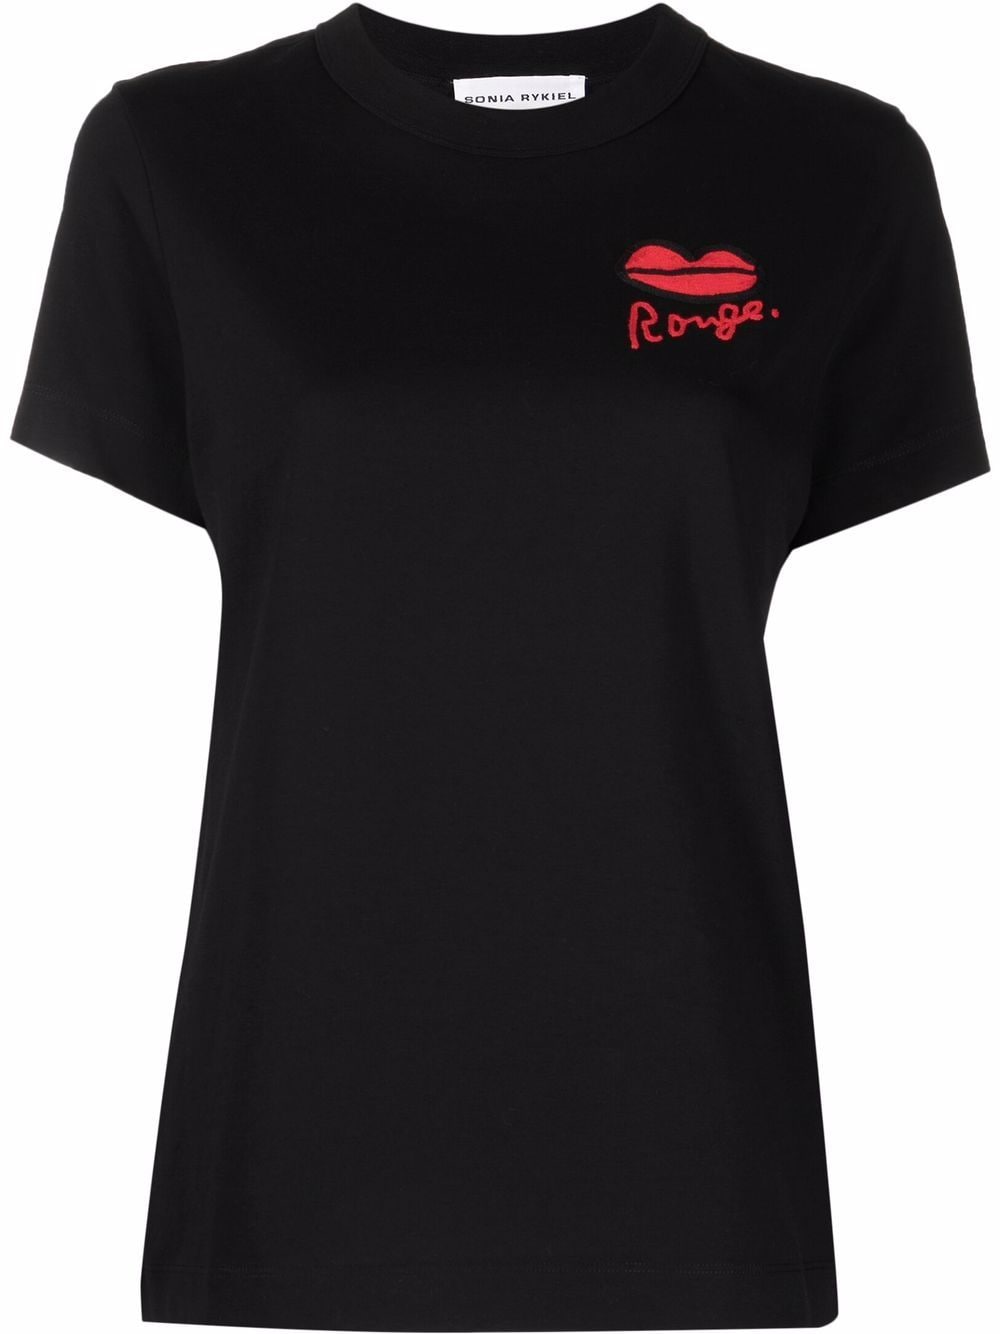 Rouge short-sleeved T-shirt